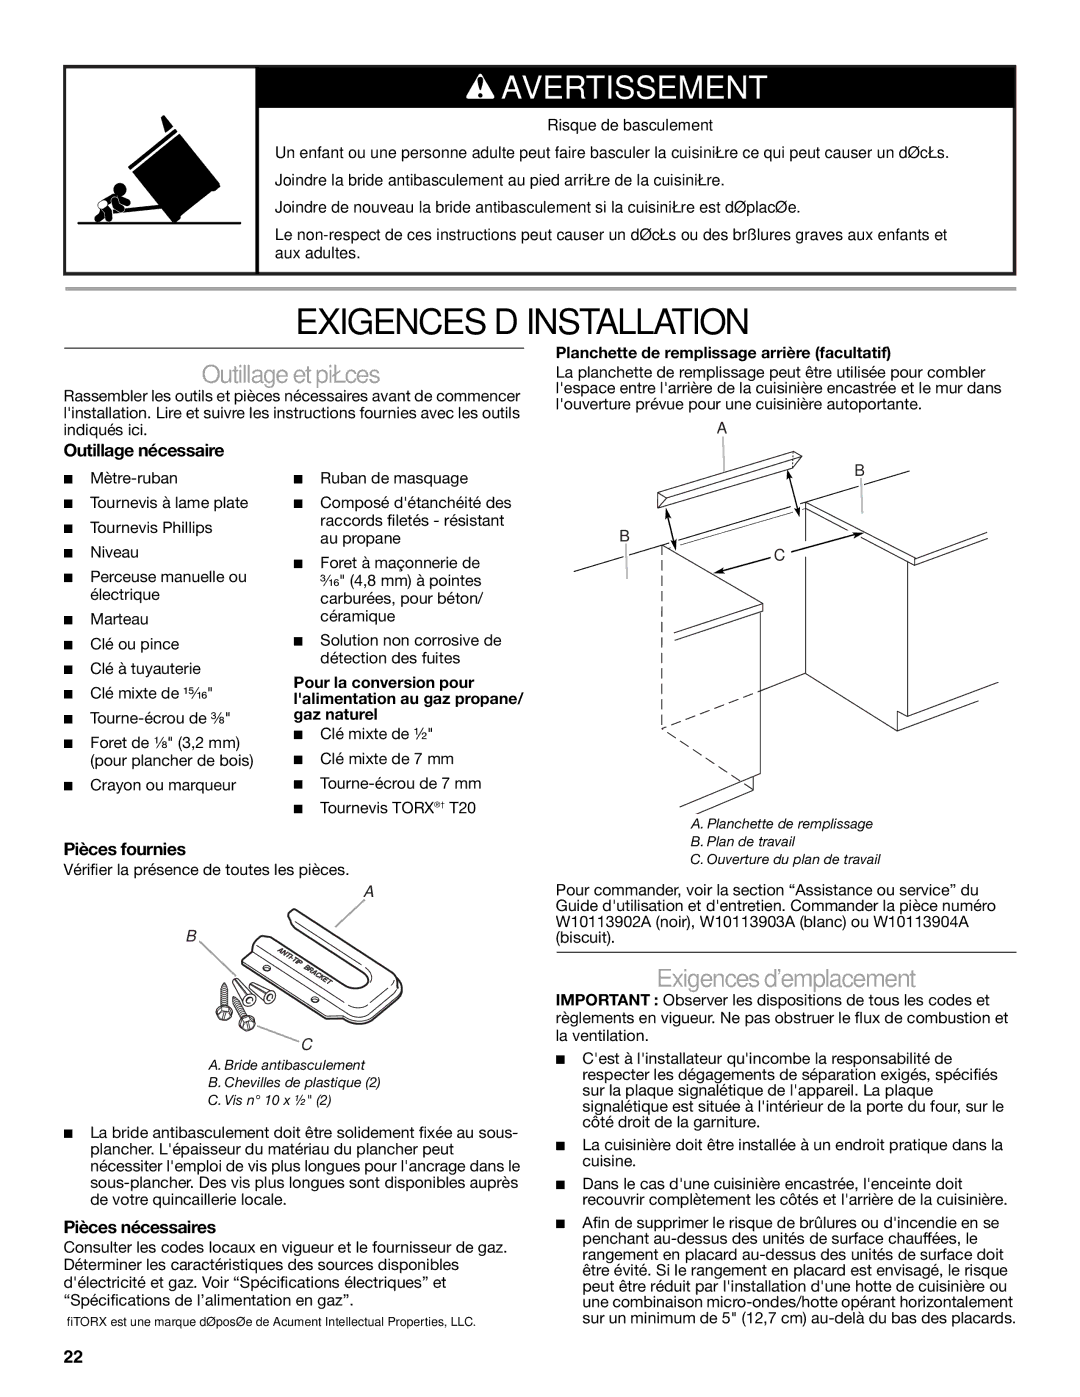 KitchenAid W10118262B installation instructions Exigences D’INSTALLATION, Outillageetpièces, Exigences demplacement 